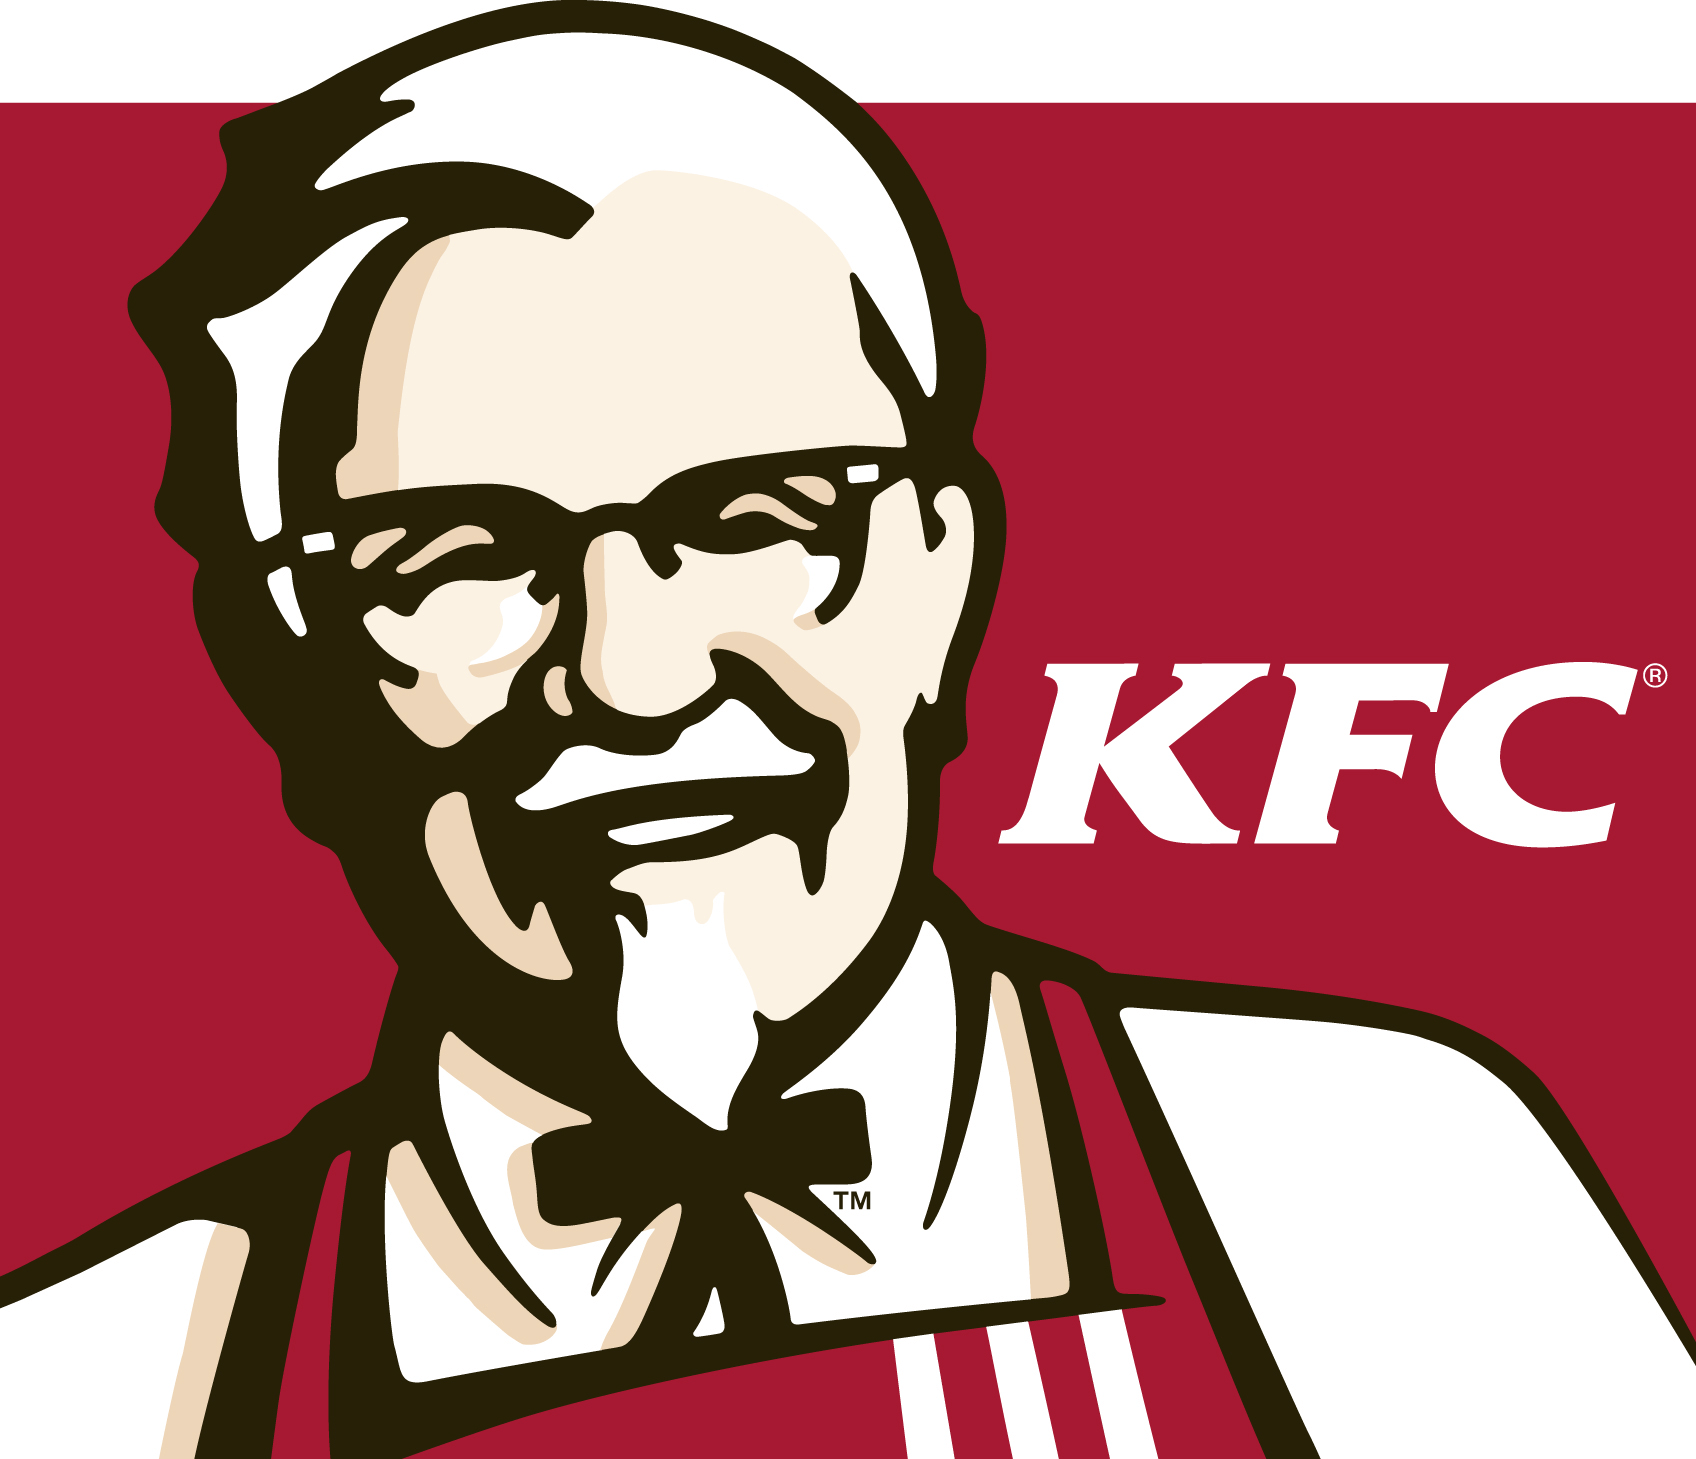 KFC logo, logotype